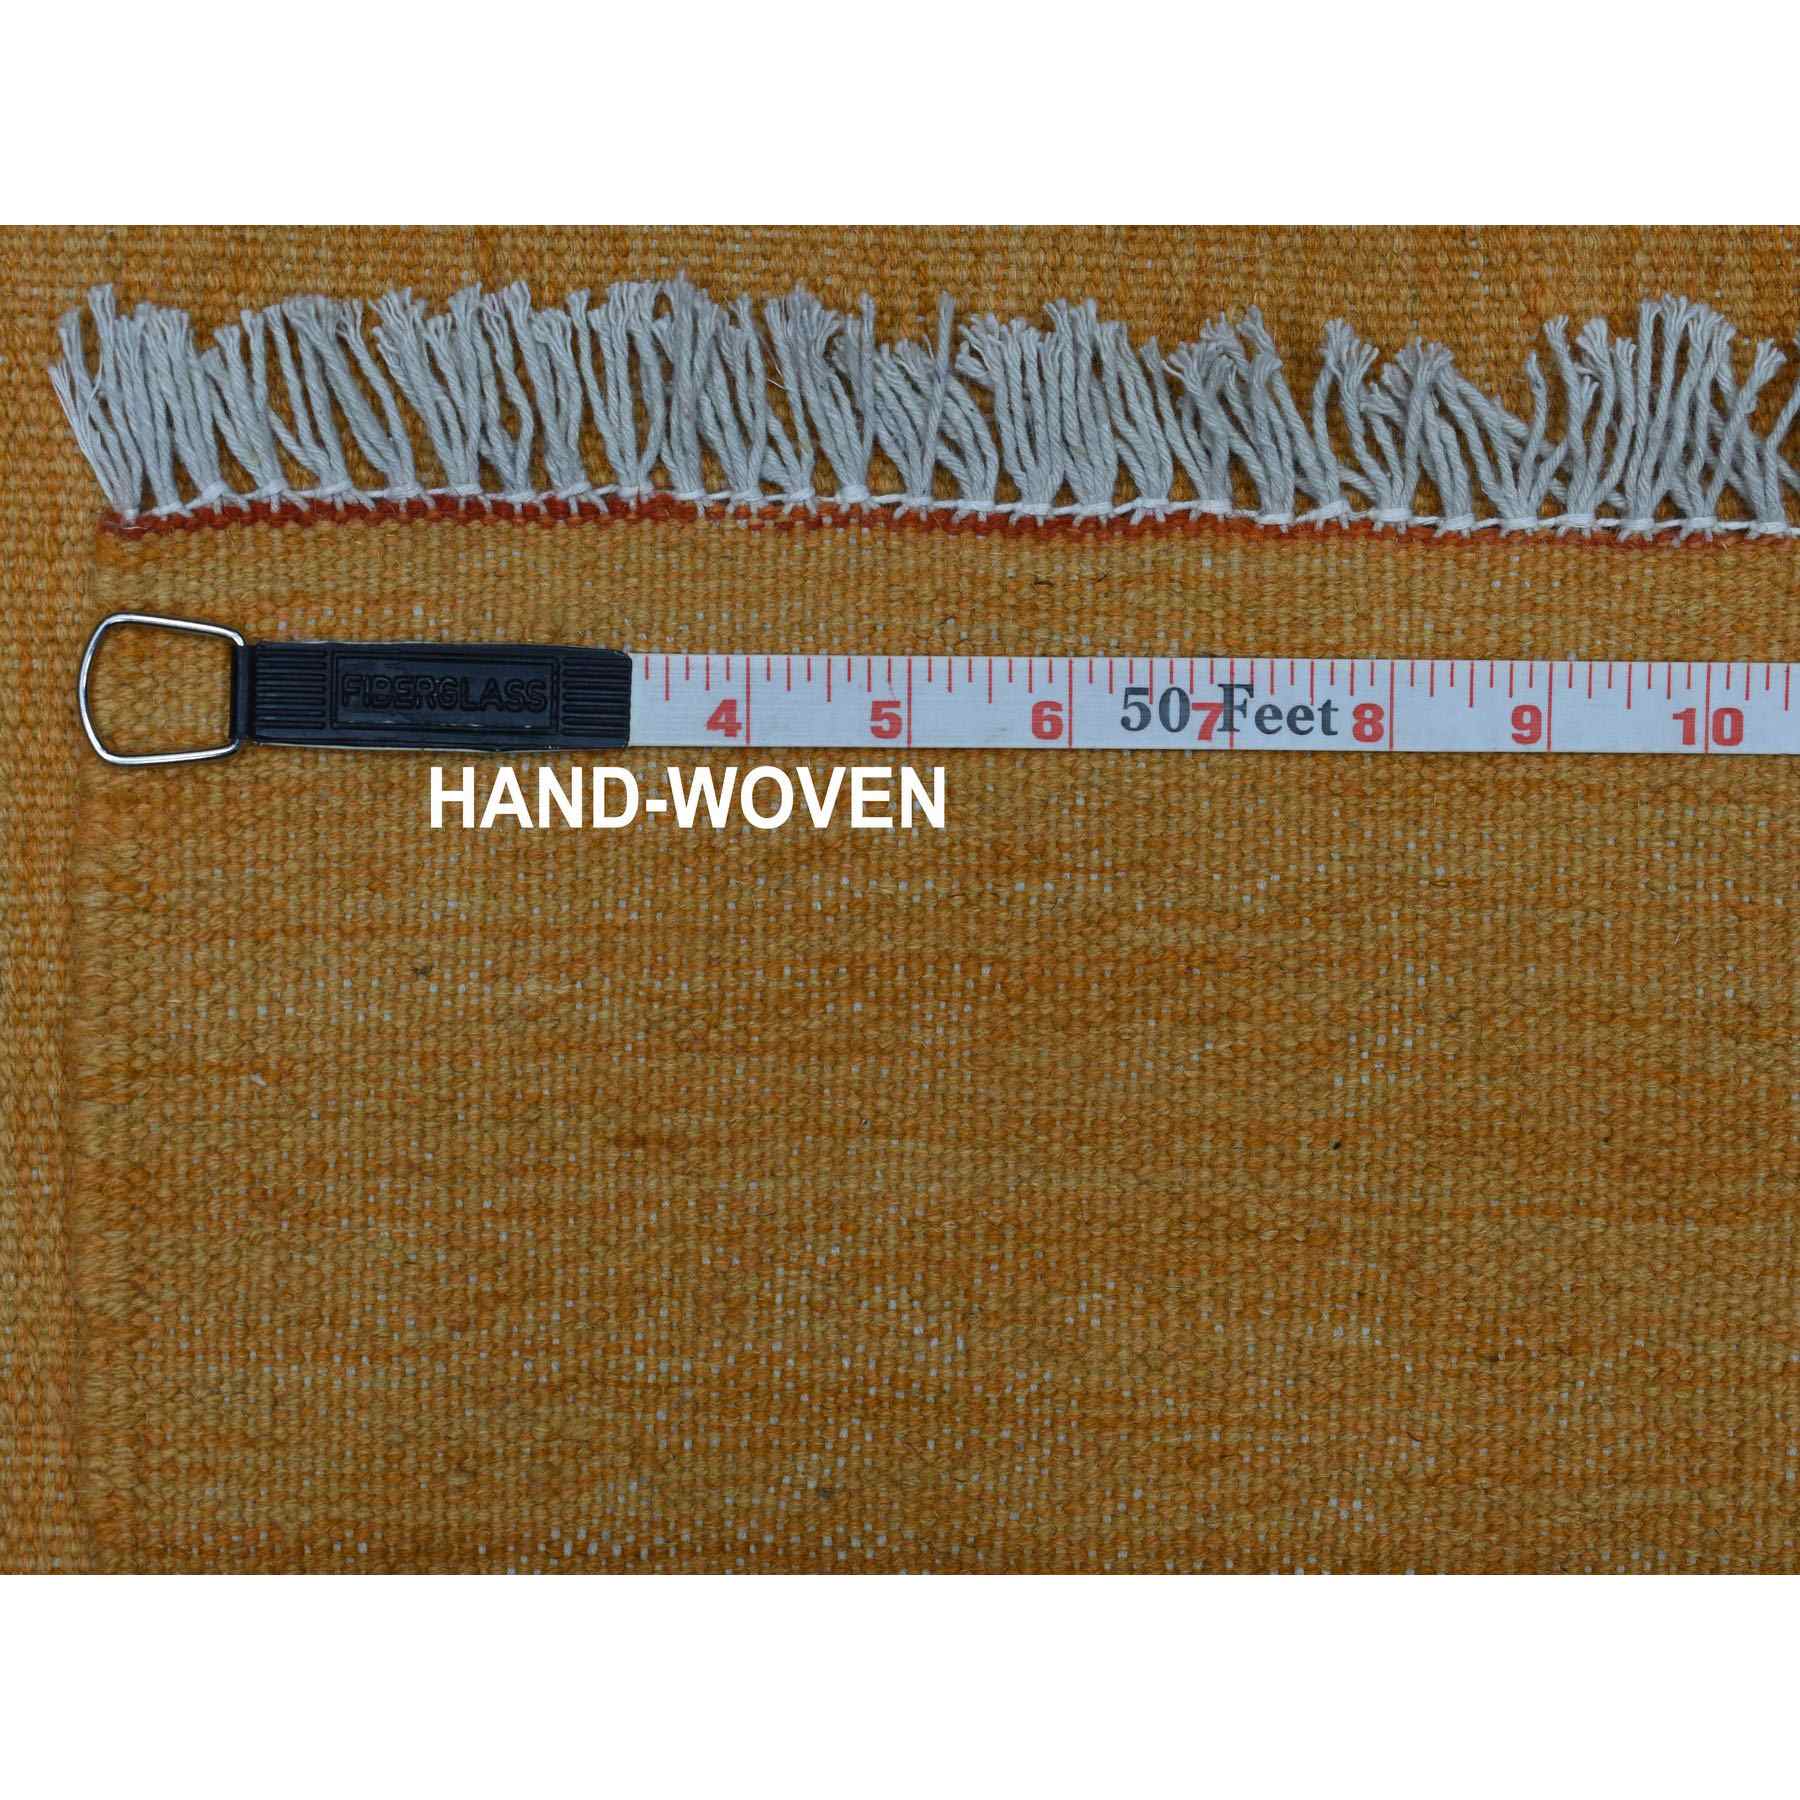 Flat-Weave-Hand-Woven-Rug-269305